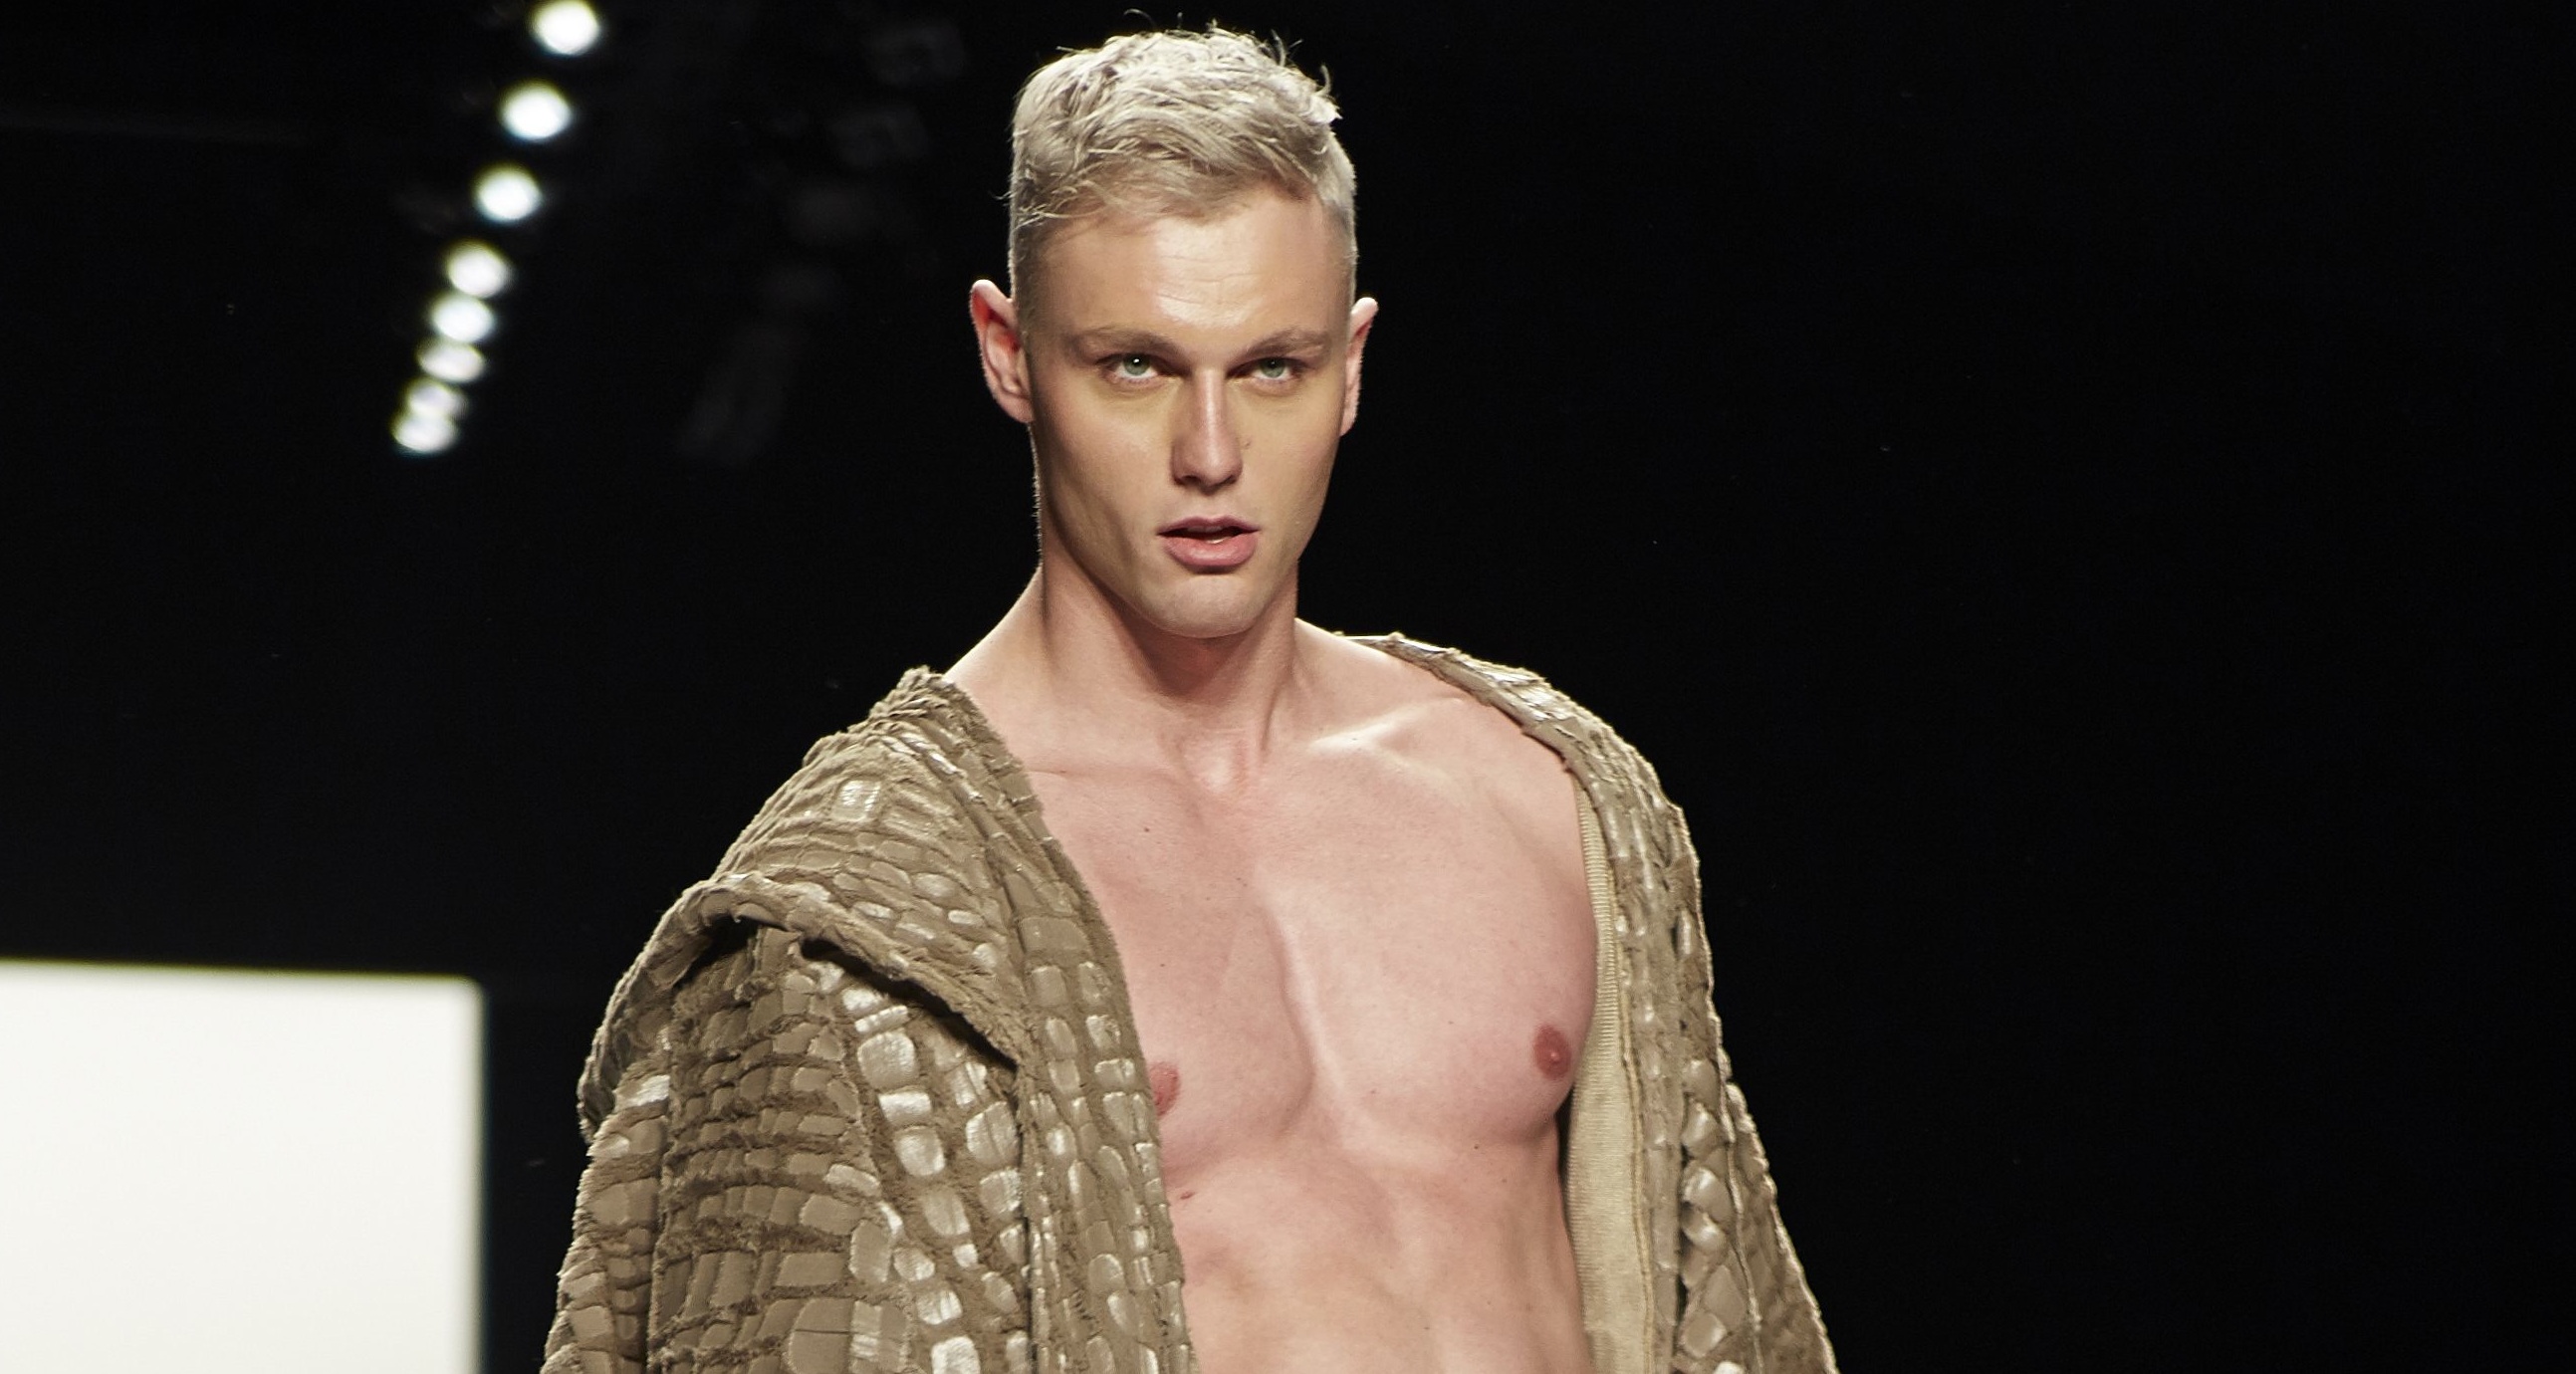 carol everett recommends Nude Male Fashion Show